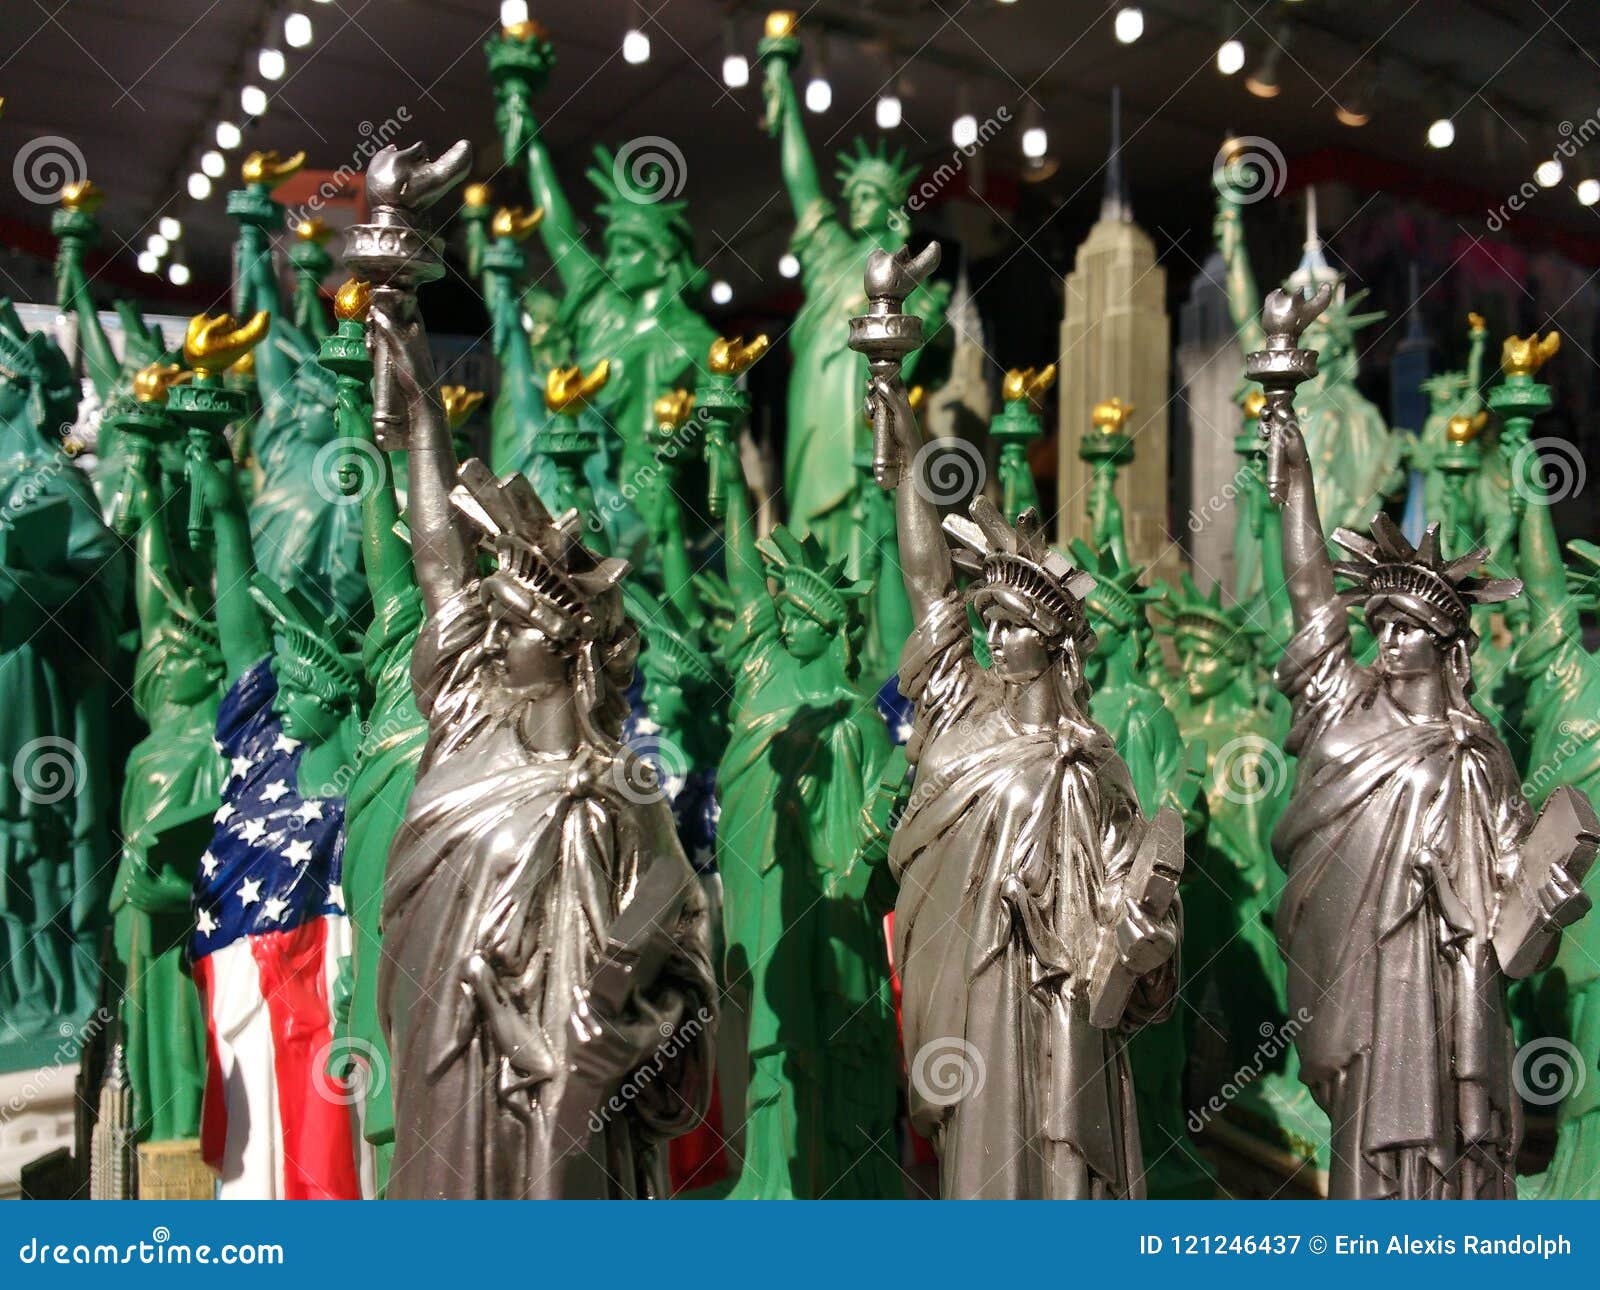 New York City Freiheitsstatue gelb Statue of Liberty 16cm Souvenir USA 